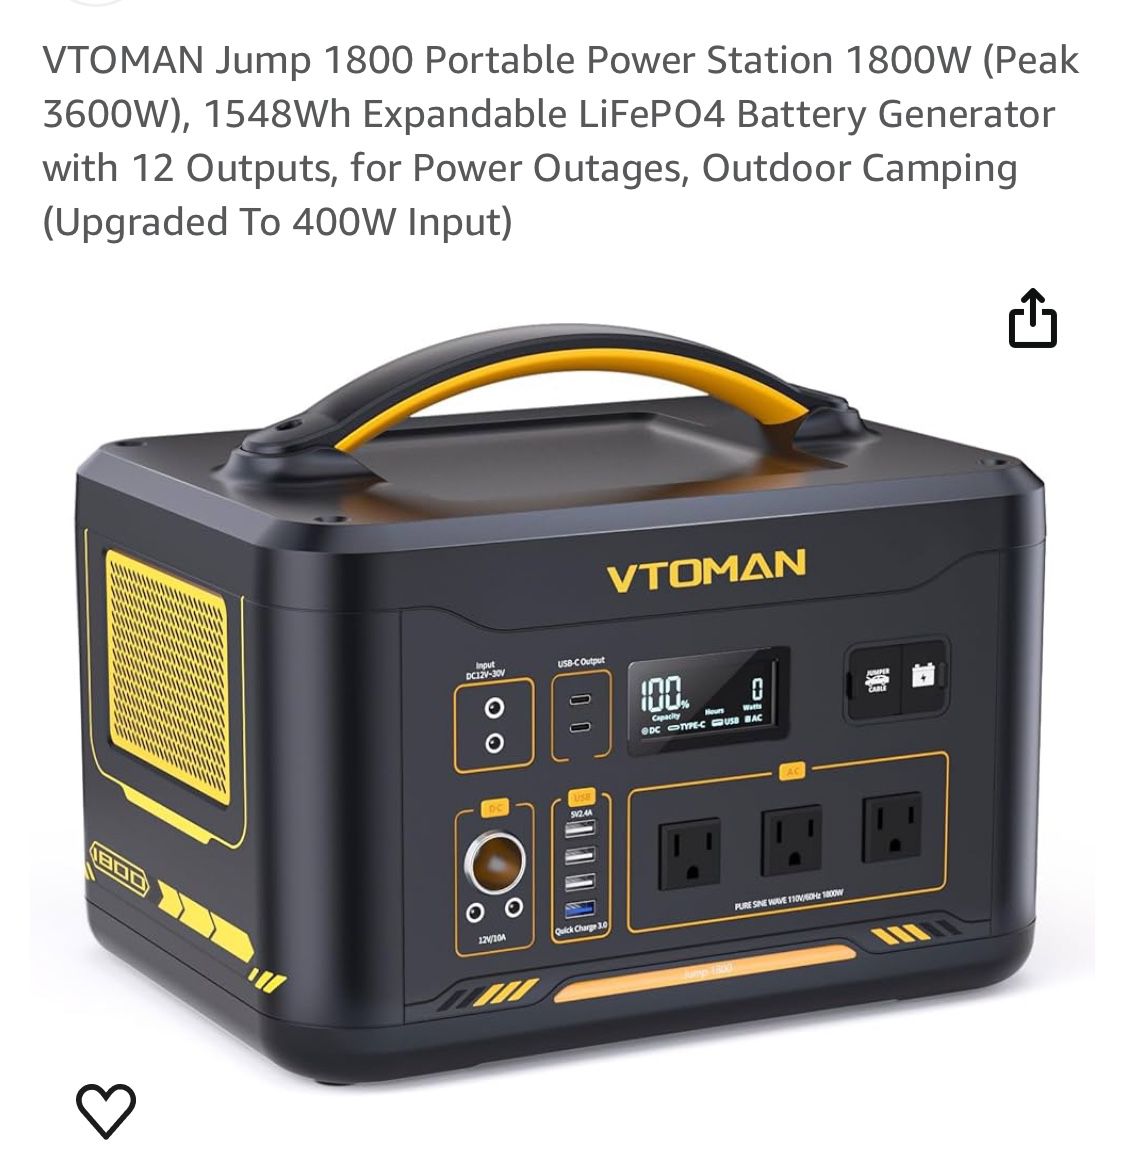 REDUCED PRICE! NRAND NEW!  Power Gnerator: VTOMAN Jump 1800 Portable Power Stationary 